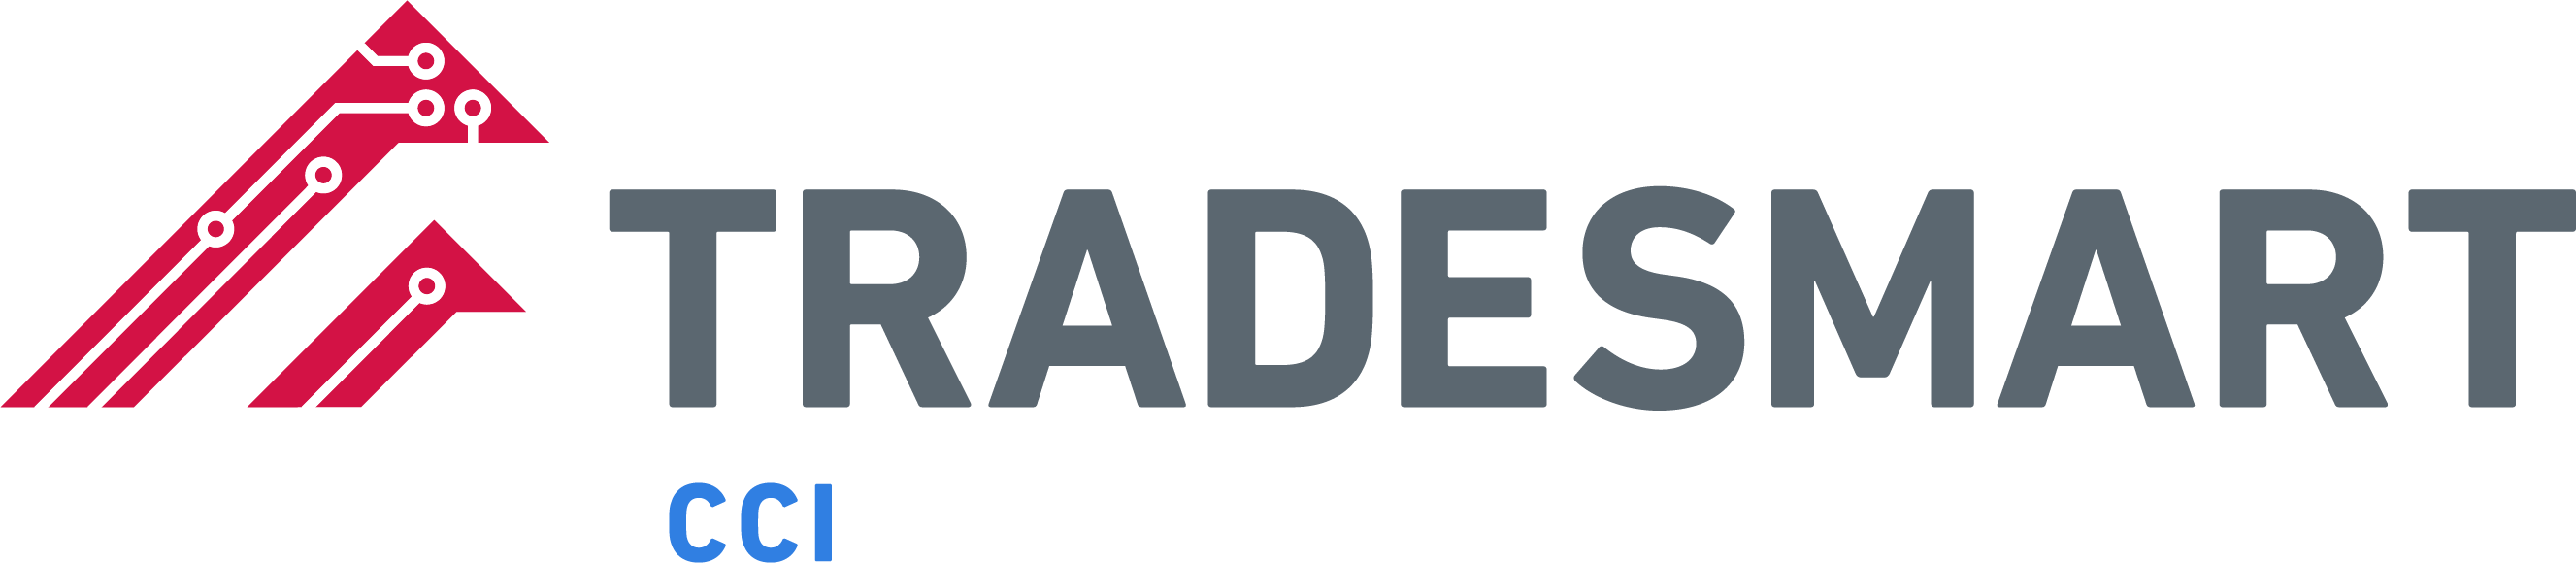 tradesmart connect logo